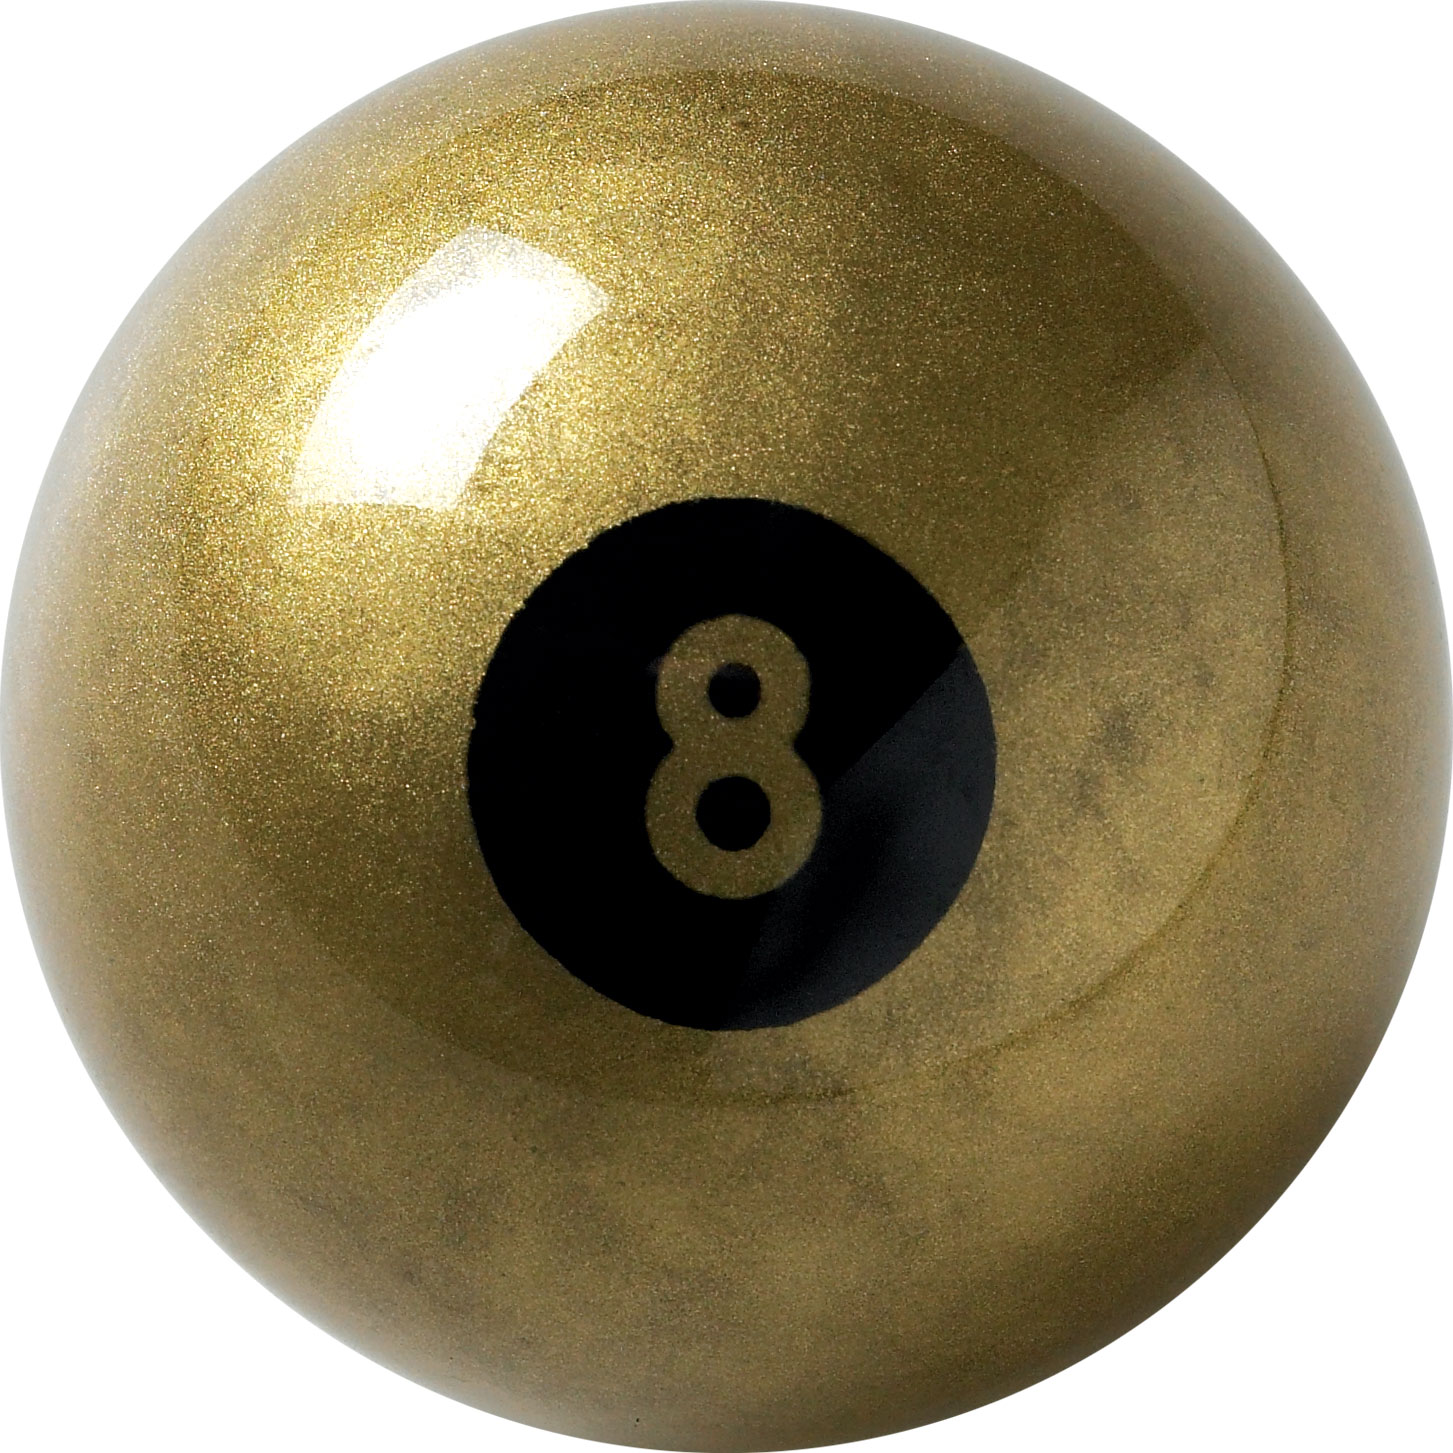 Бильярдный шар 4. Бильярдный шар. Шар для бильярда. Бильярдный шар 8. Бильярдные шары.